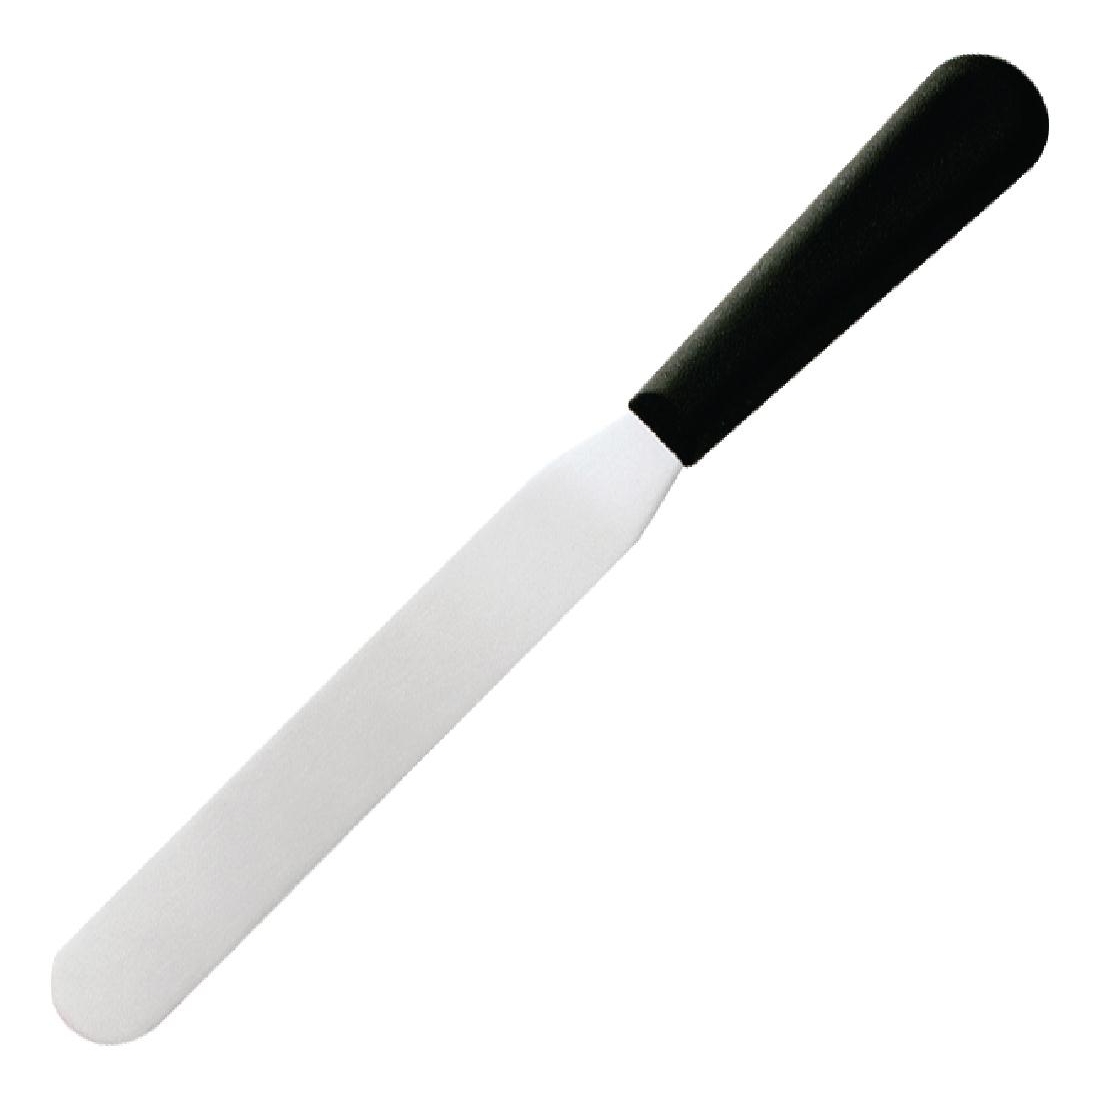 Victorinox Palette Knife 20.5cm